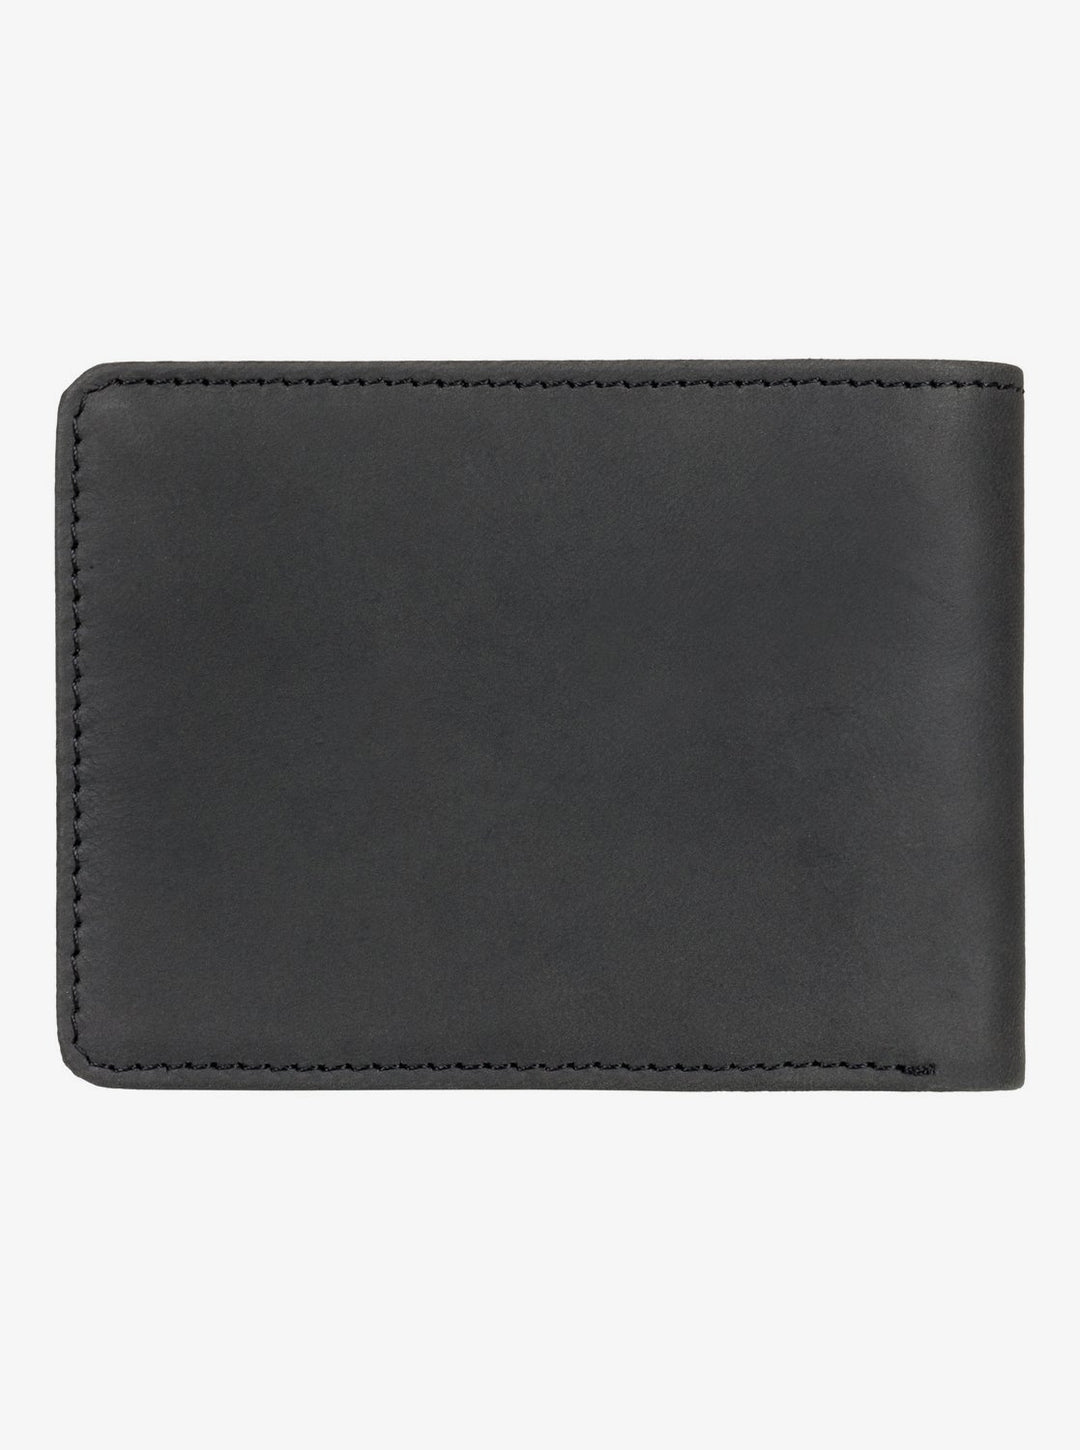 Quiksilver Mac Tri-Fold Leather Wallet